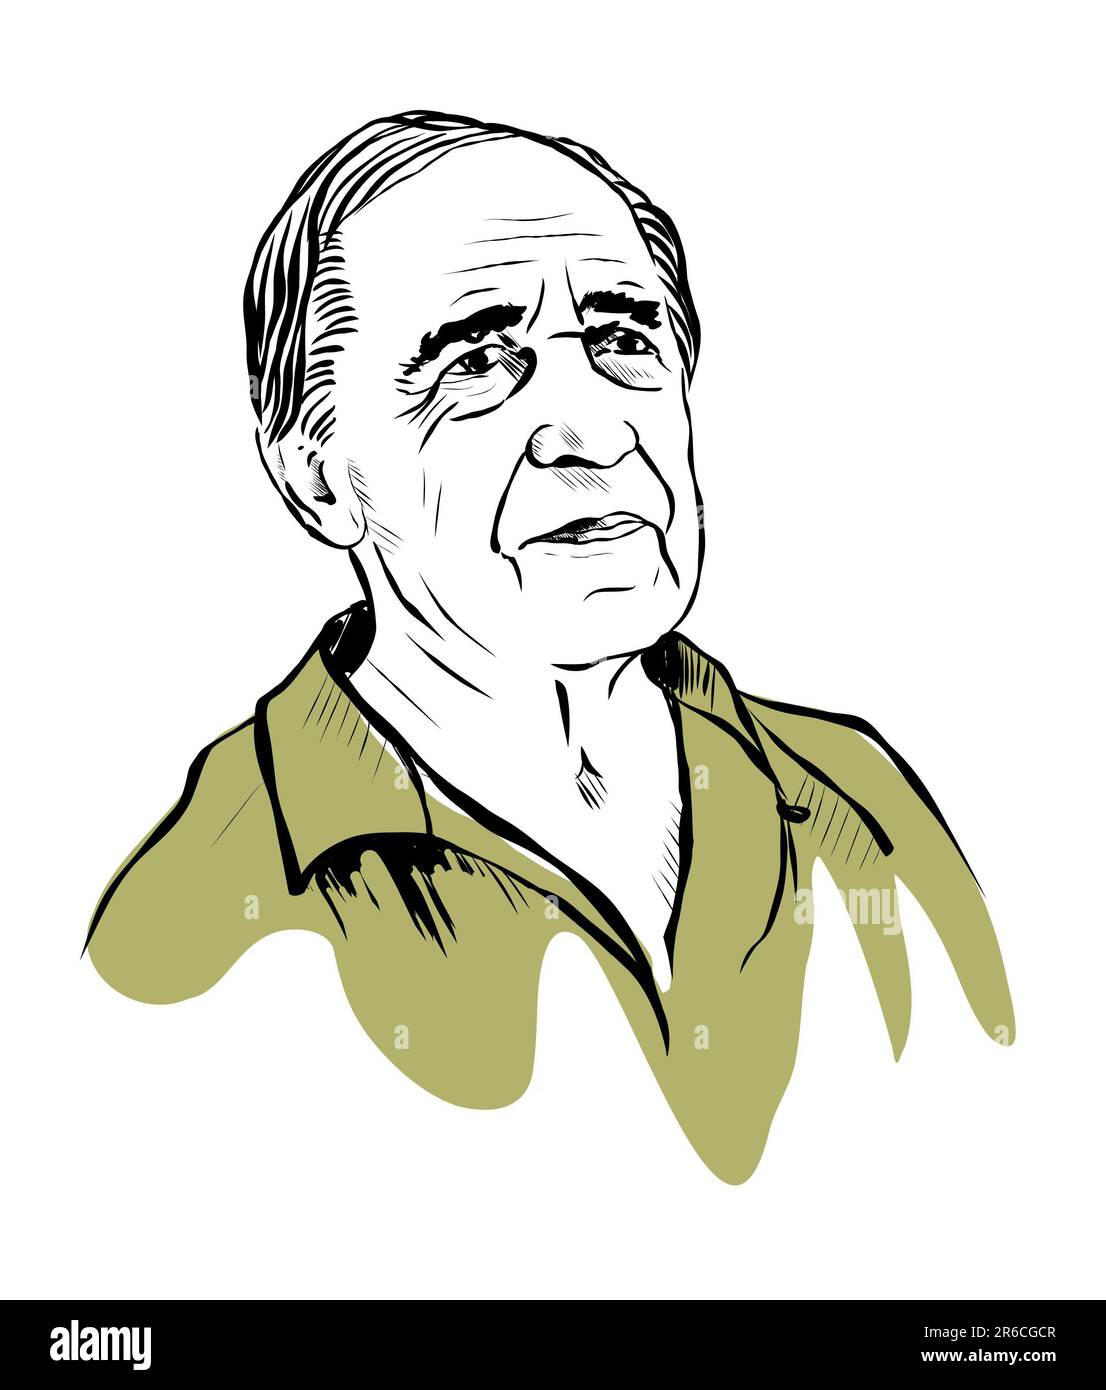 Pierre Boulez portrait image, illustration, hand drawn sketch isolated on white background Stock Photo